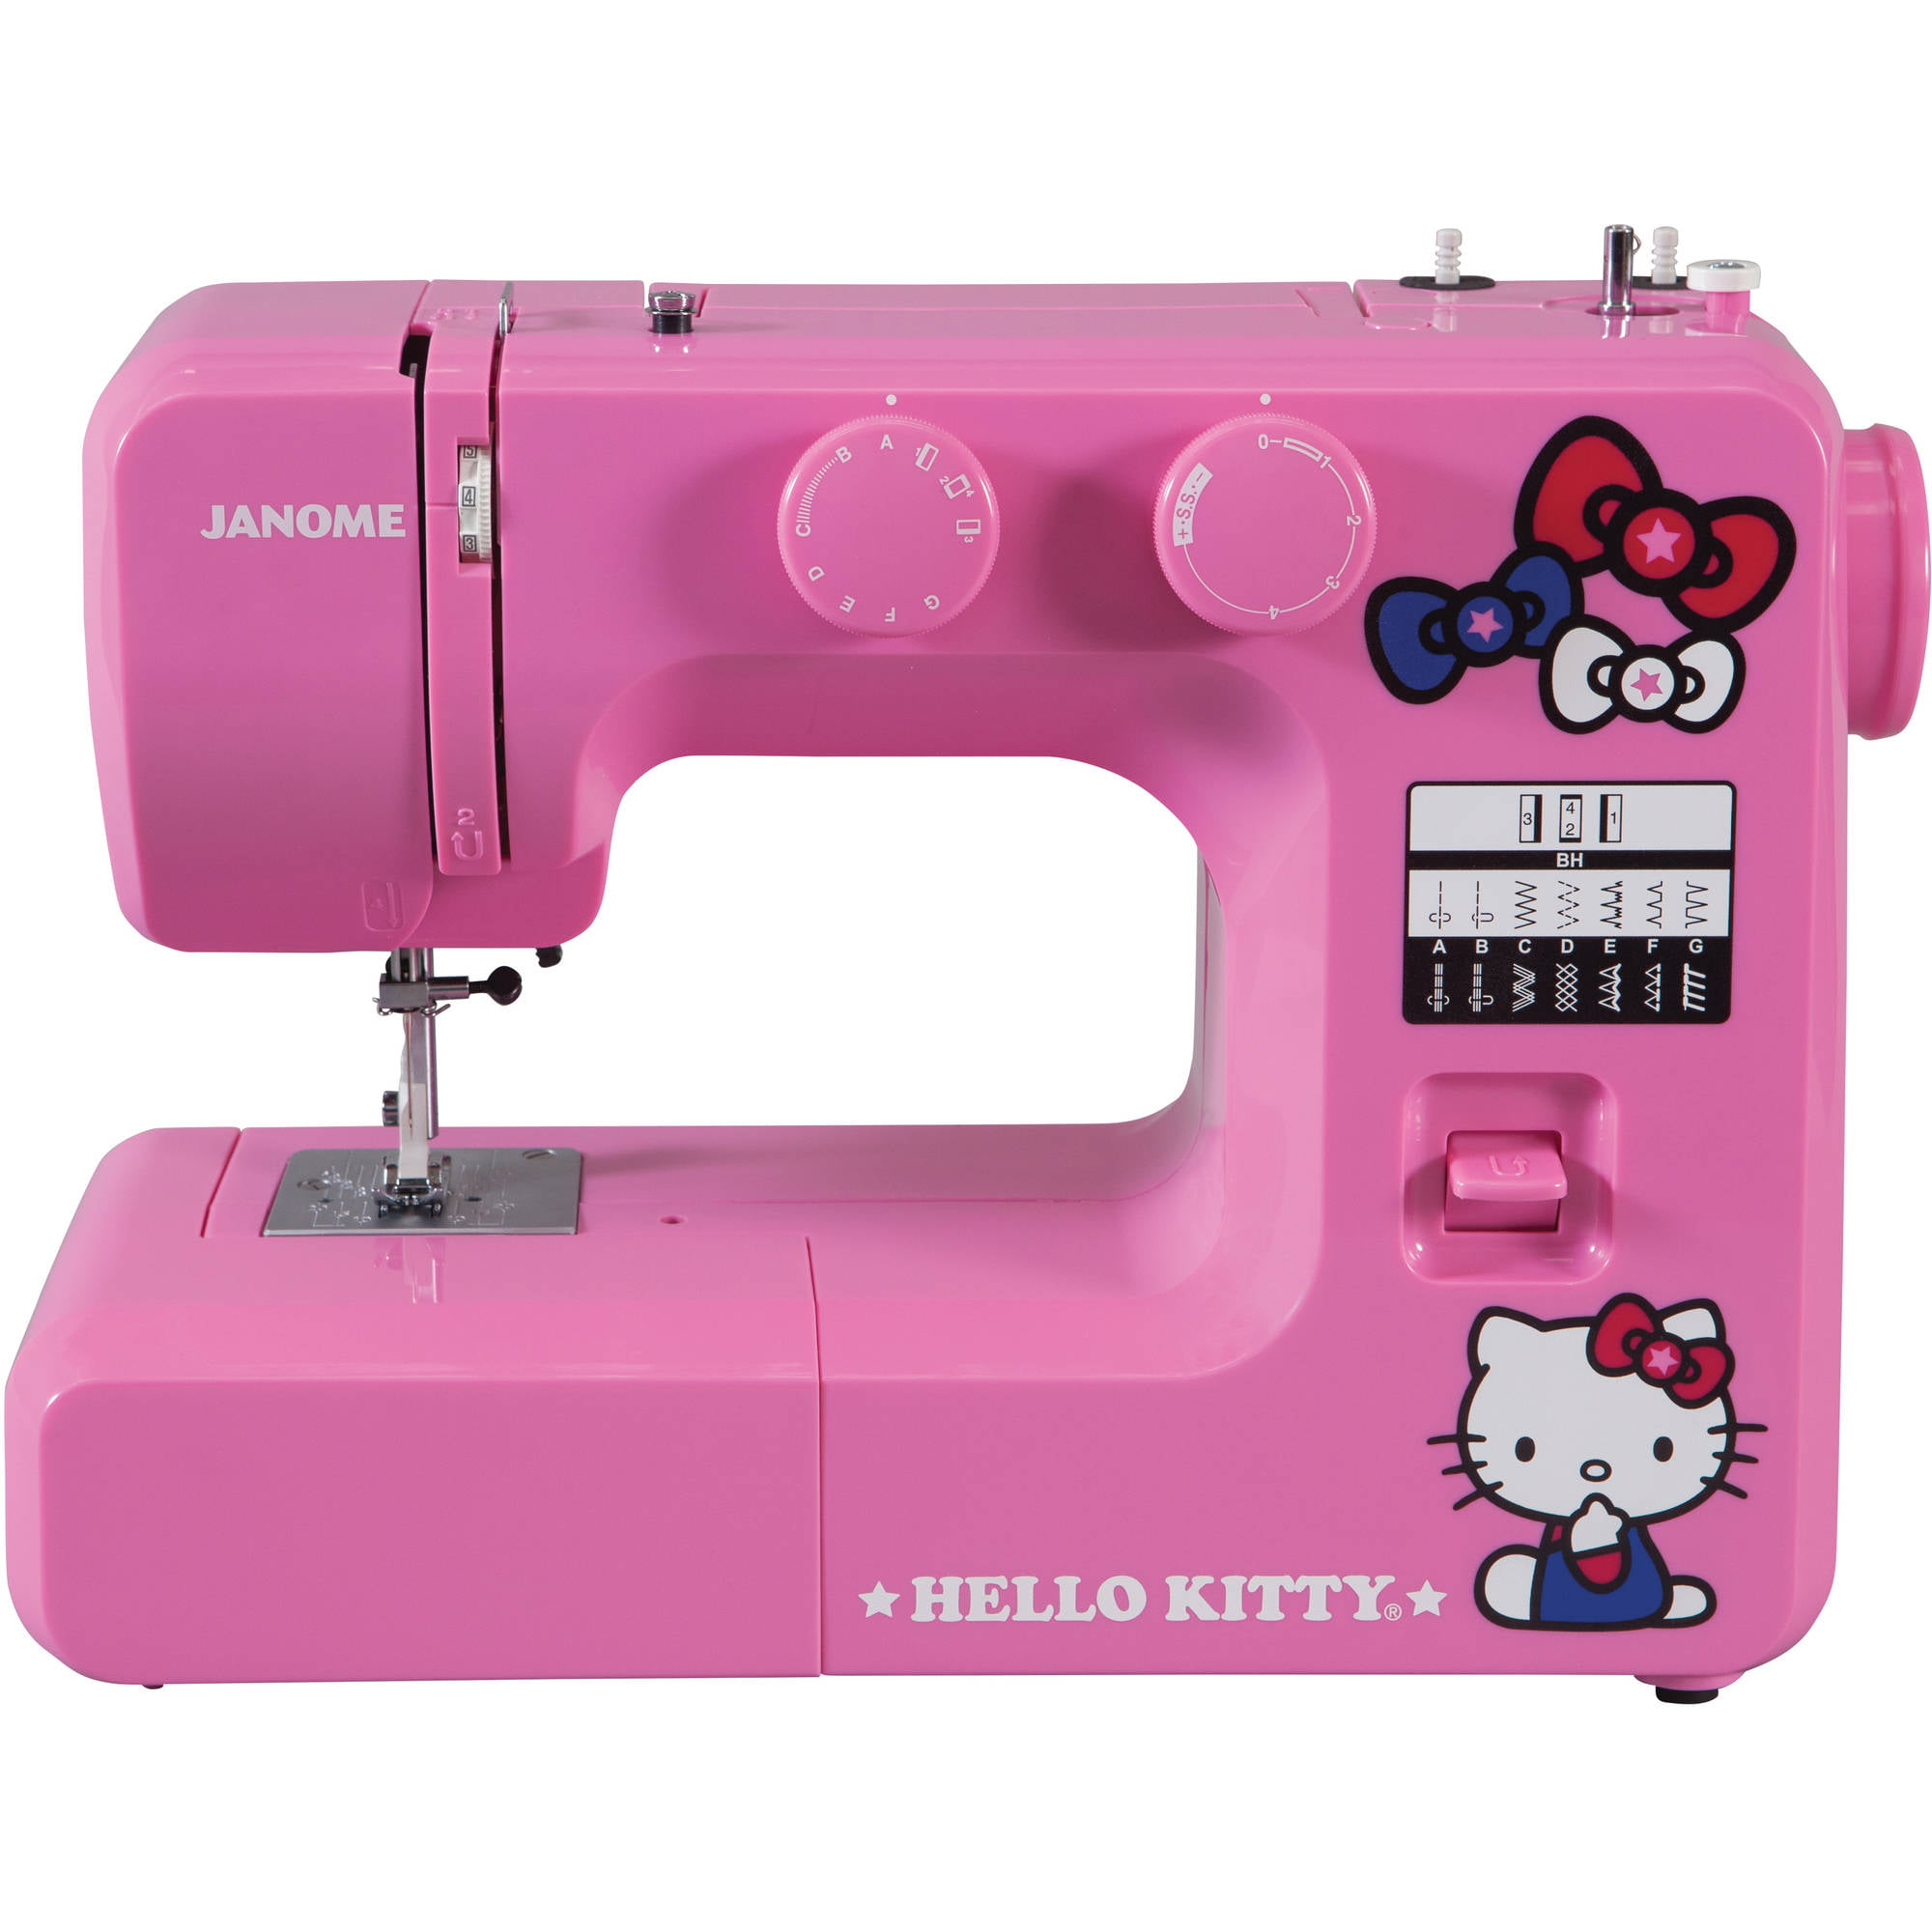 no way i found a mf hello kitty sewing machine at my thrift 😭 #hellok